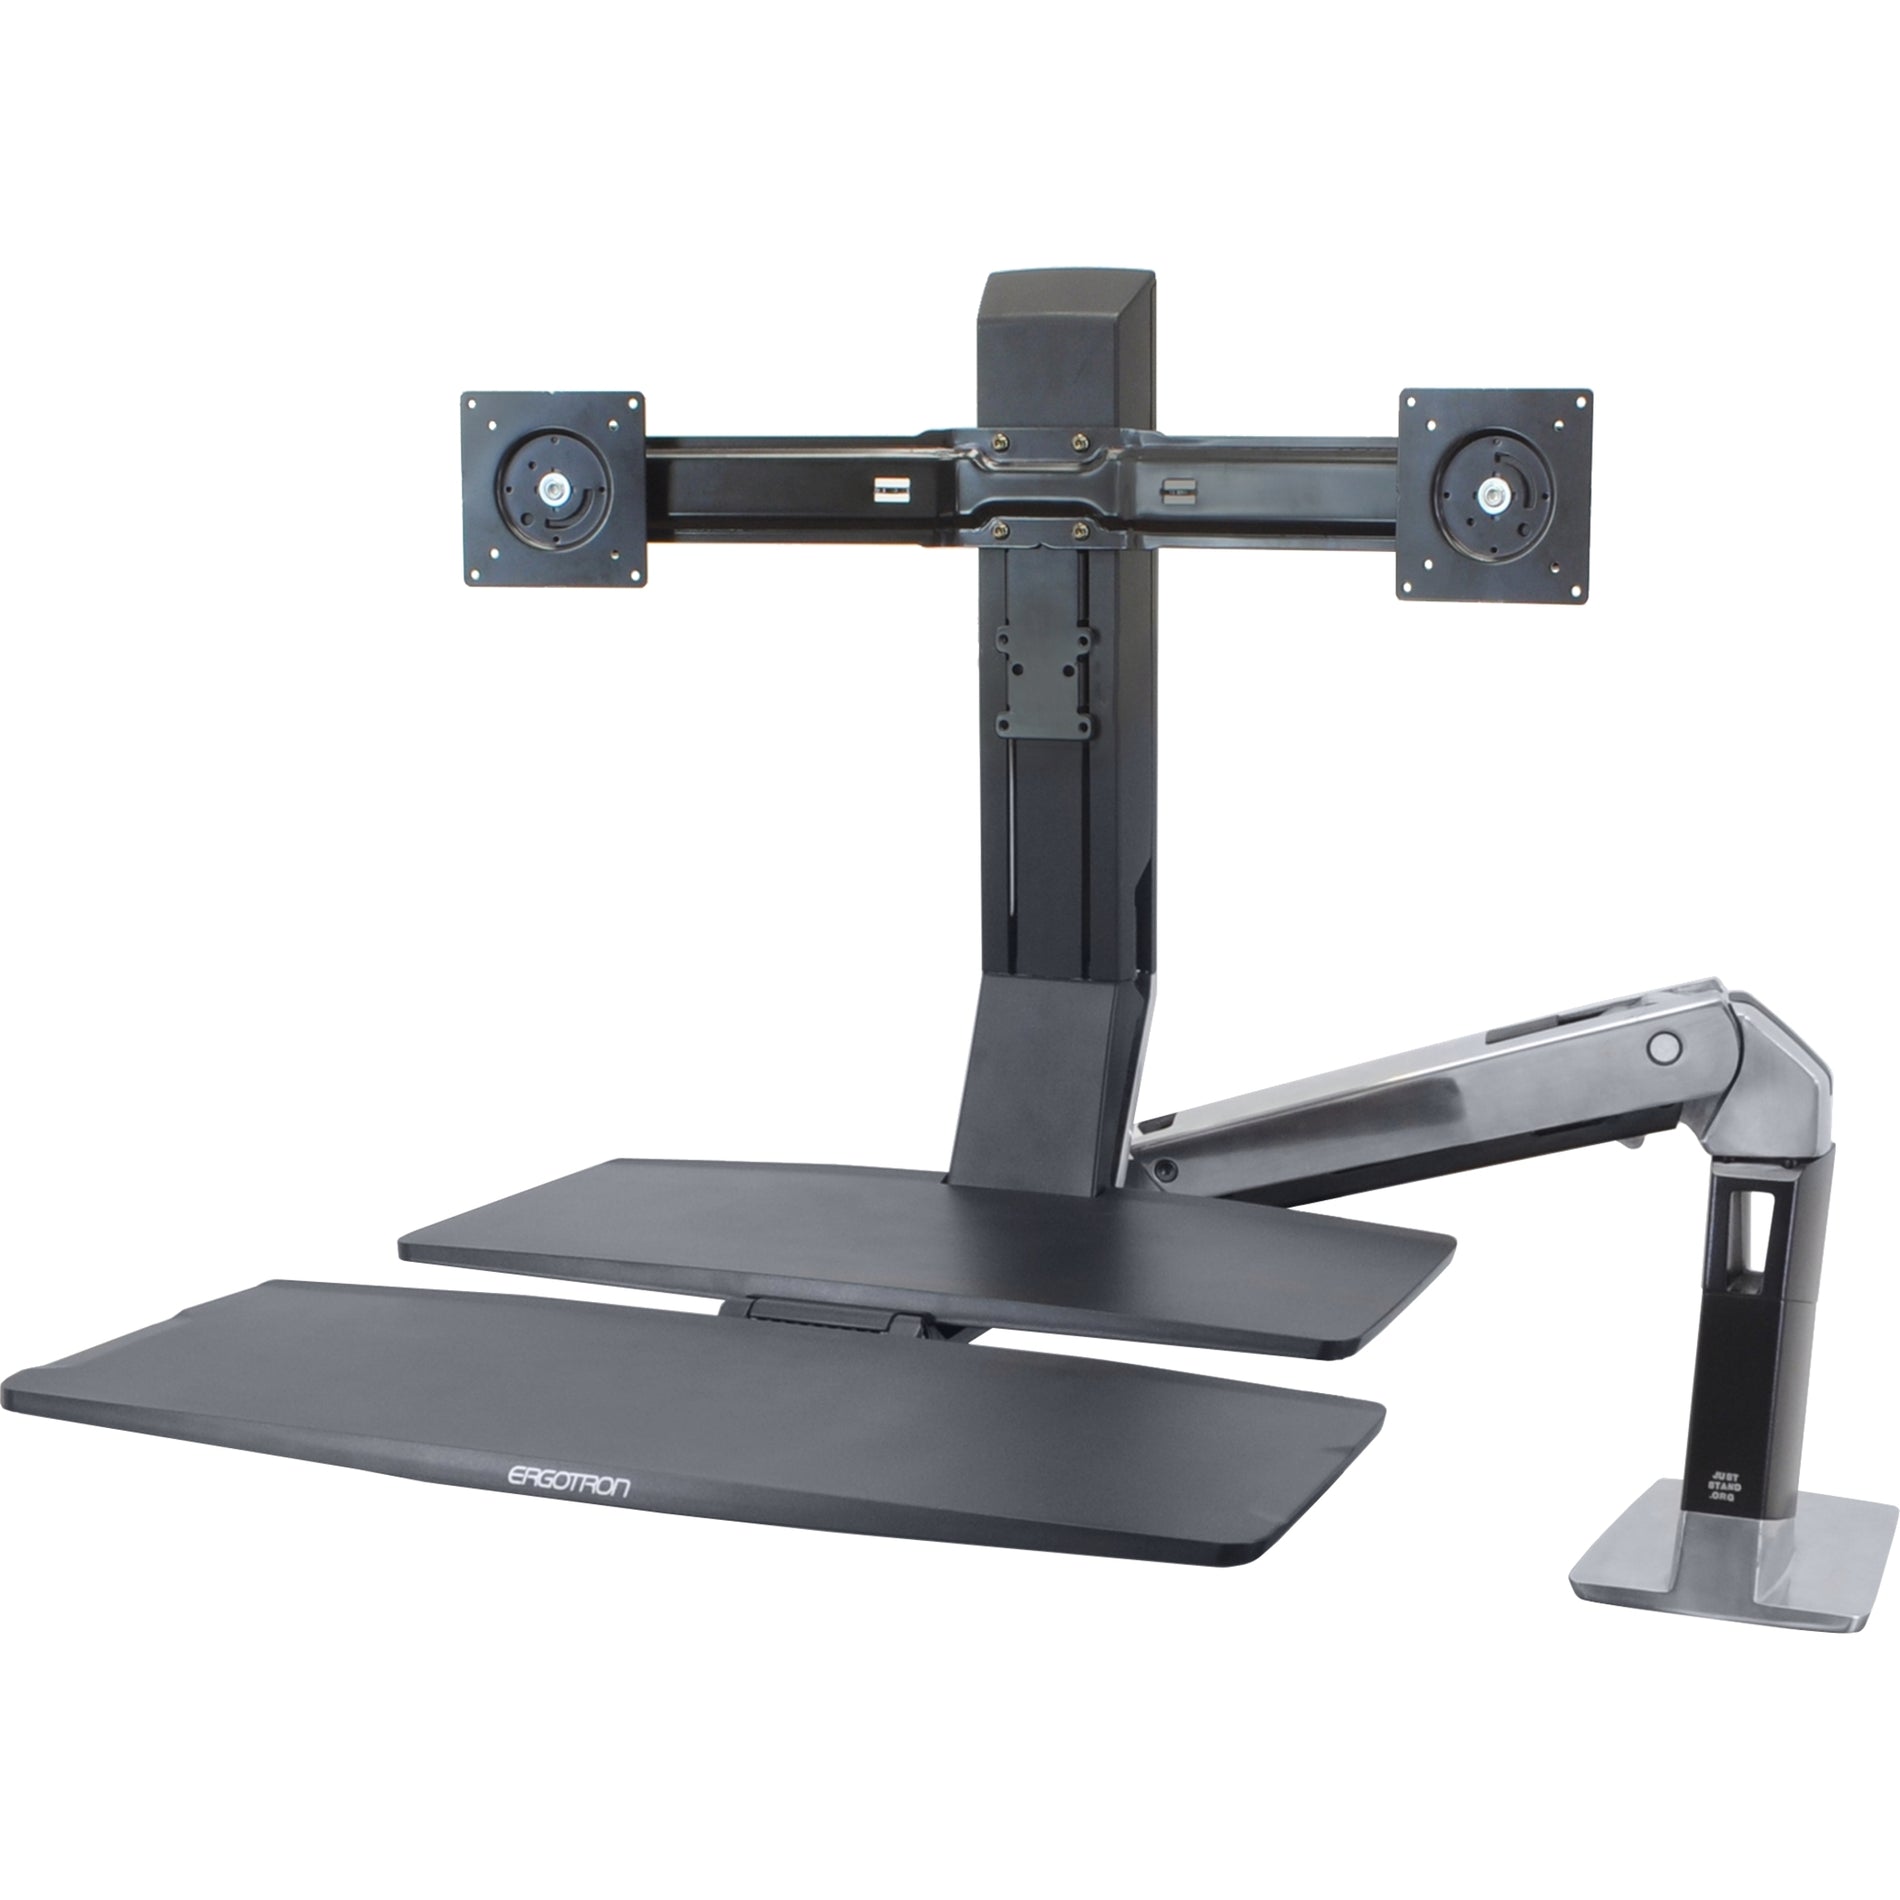 Ergotron 24-316-026 WorkFit Mounting Arm for Flat Panel Display, Polished Black, Foldable, Tilt, Keyboard Tray